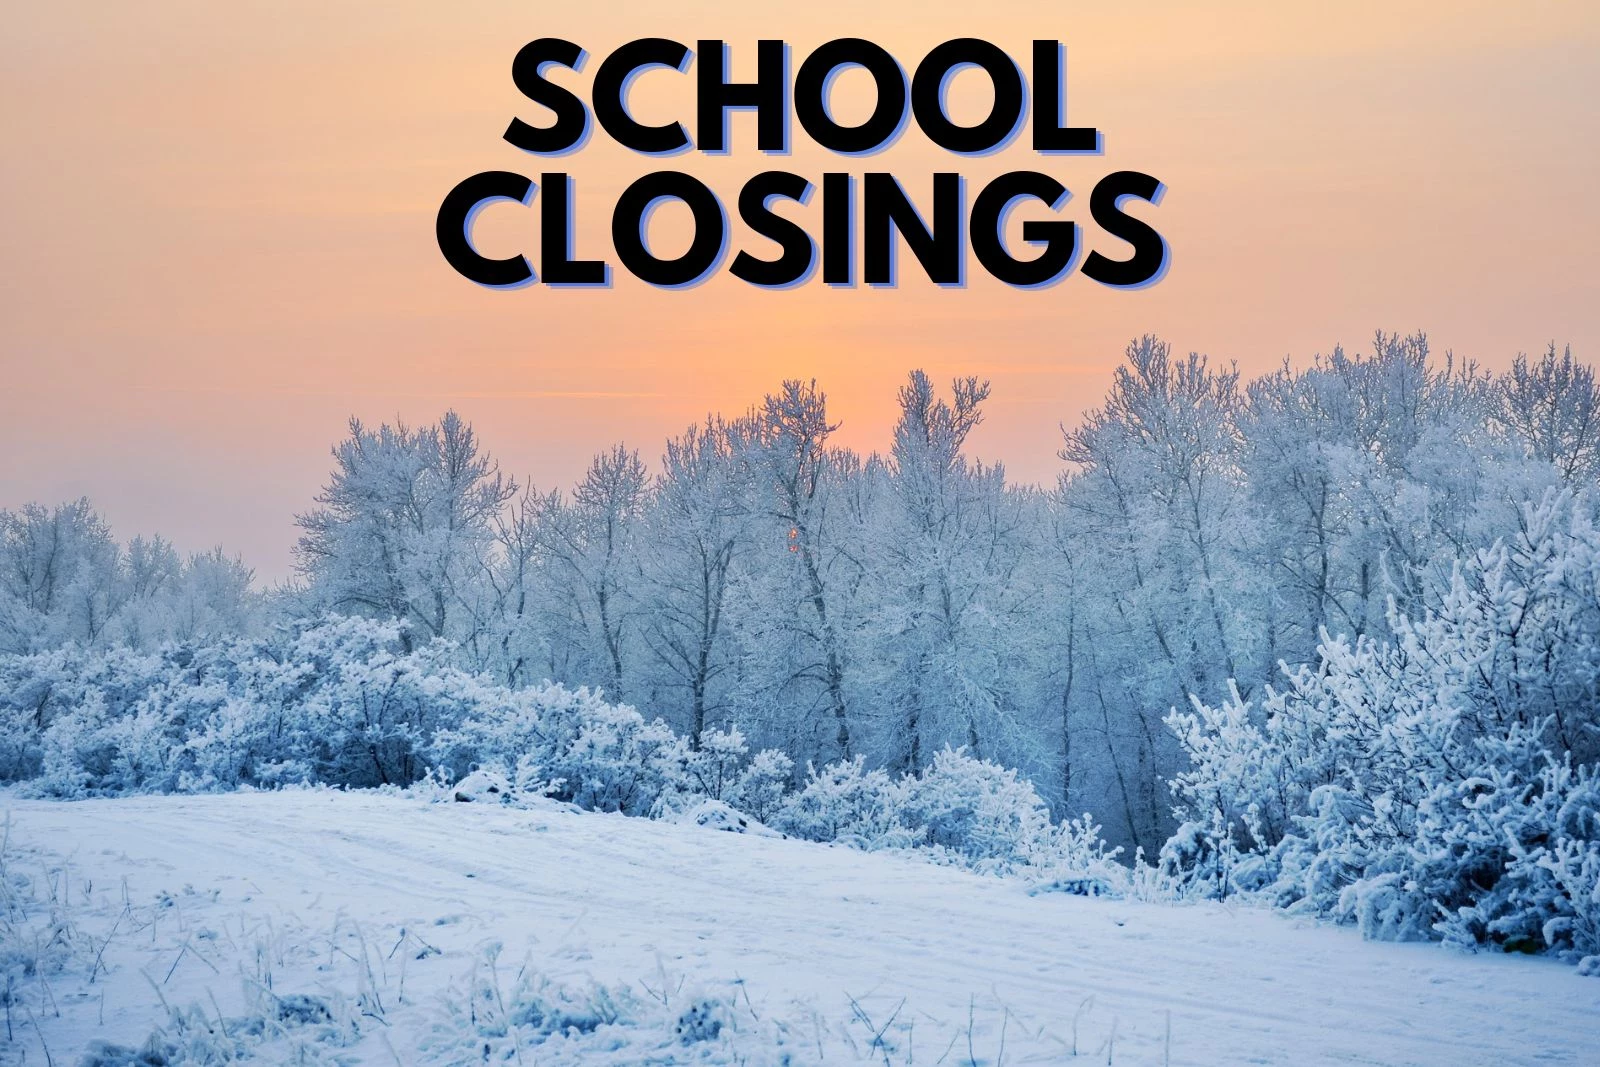 school closed snow